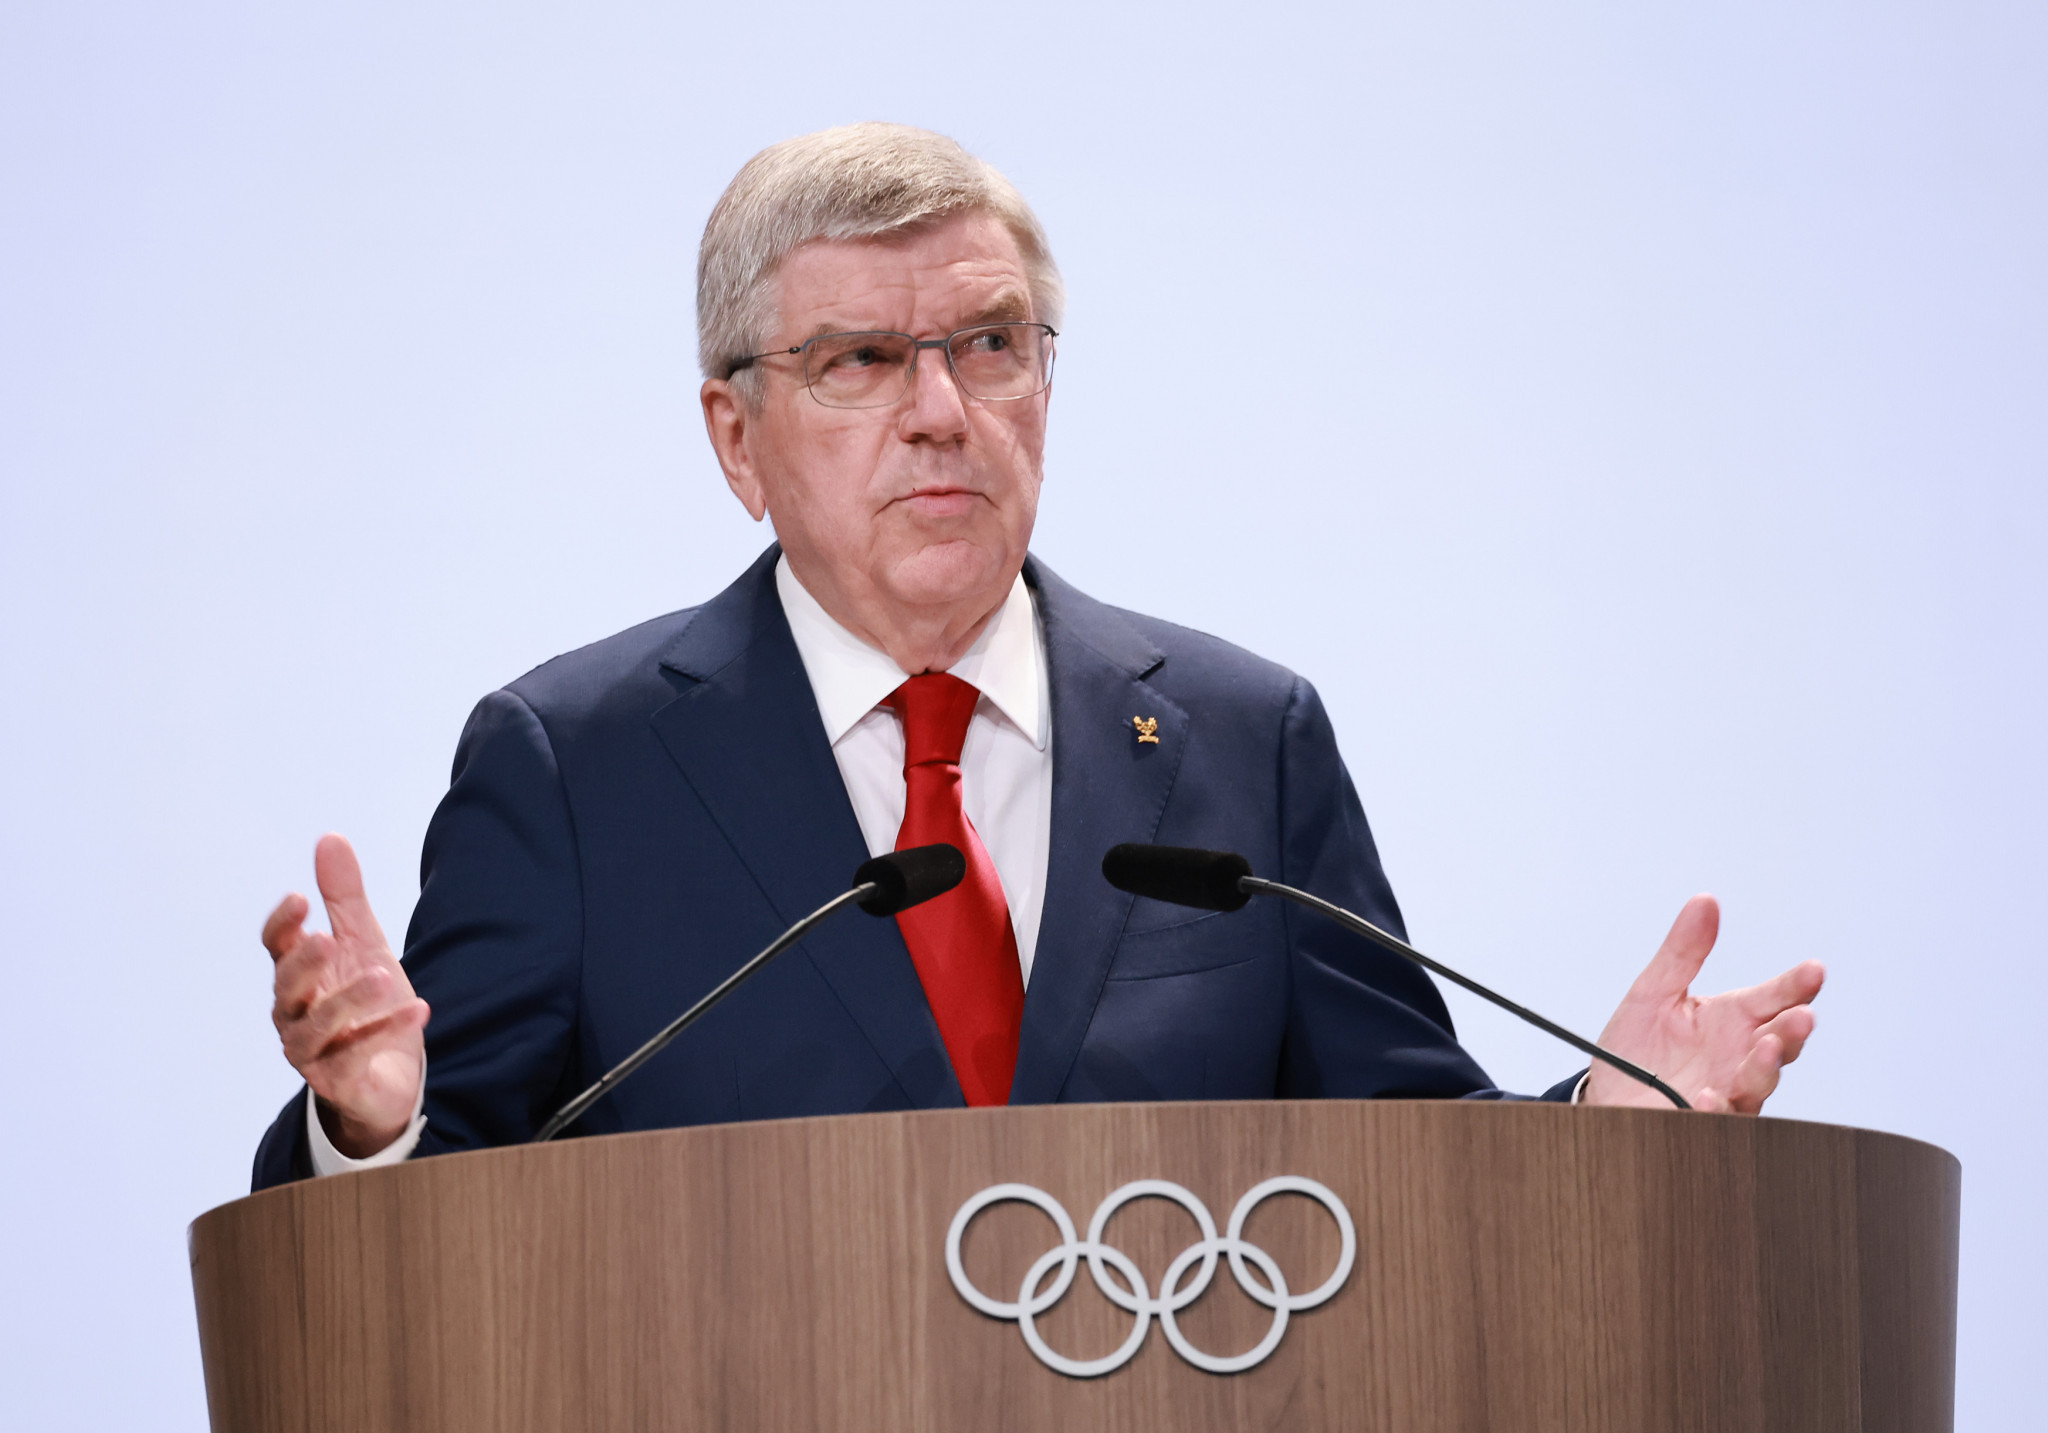 IOC President Thomas Bach. GETTY IMAGES